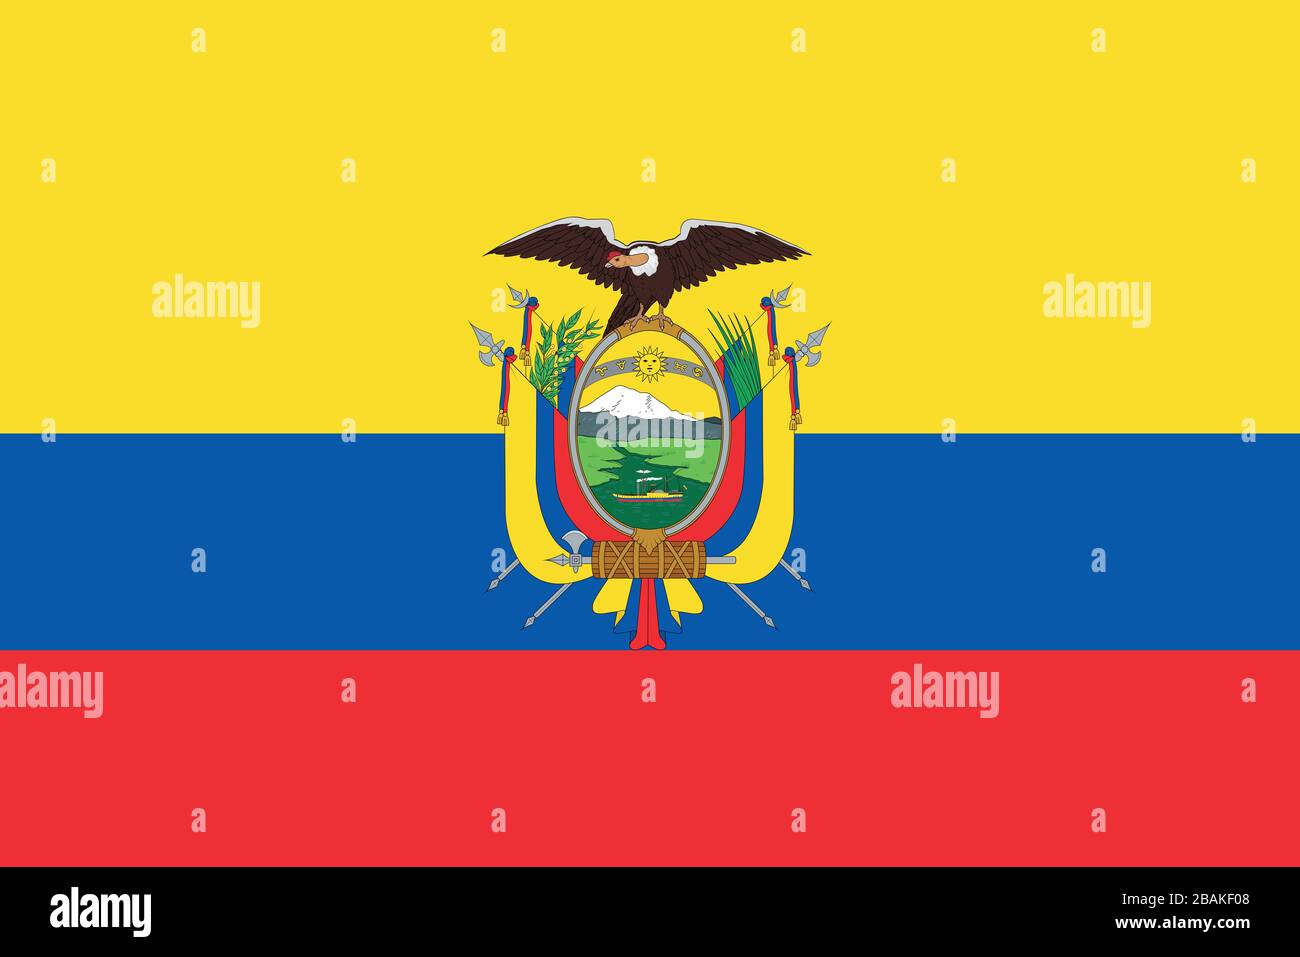 Flagge Ecuadors - Standardverhältnis der ecuadorianischen Flagge - True RGB-Farbmodus Stockfoto